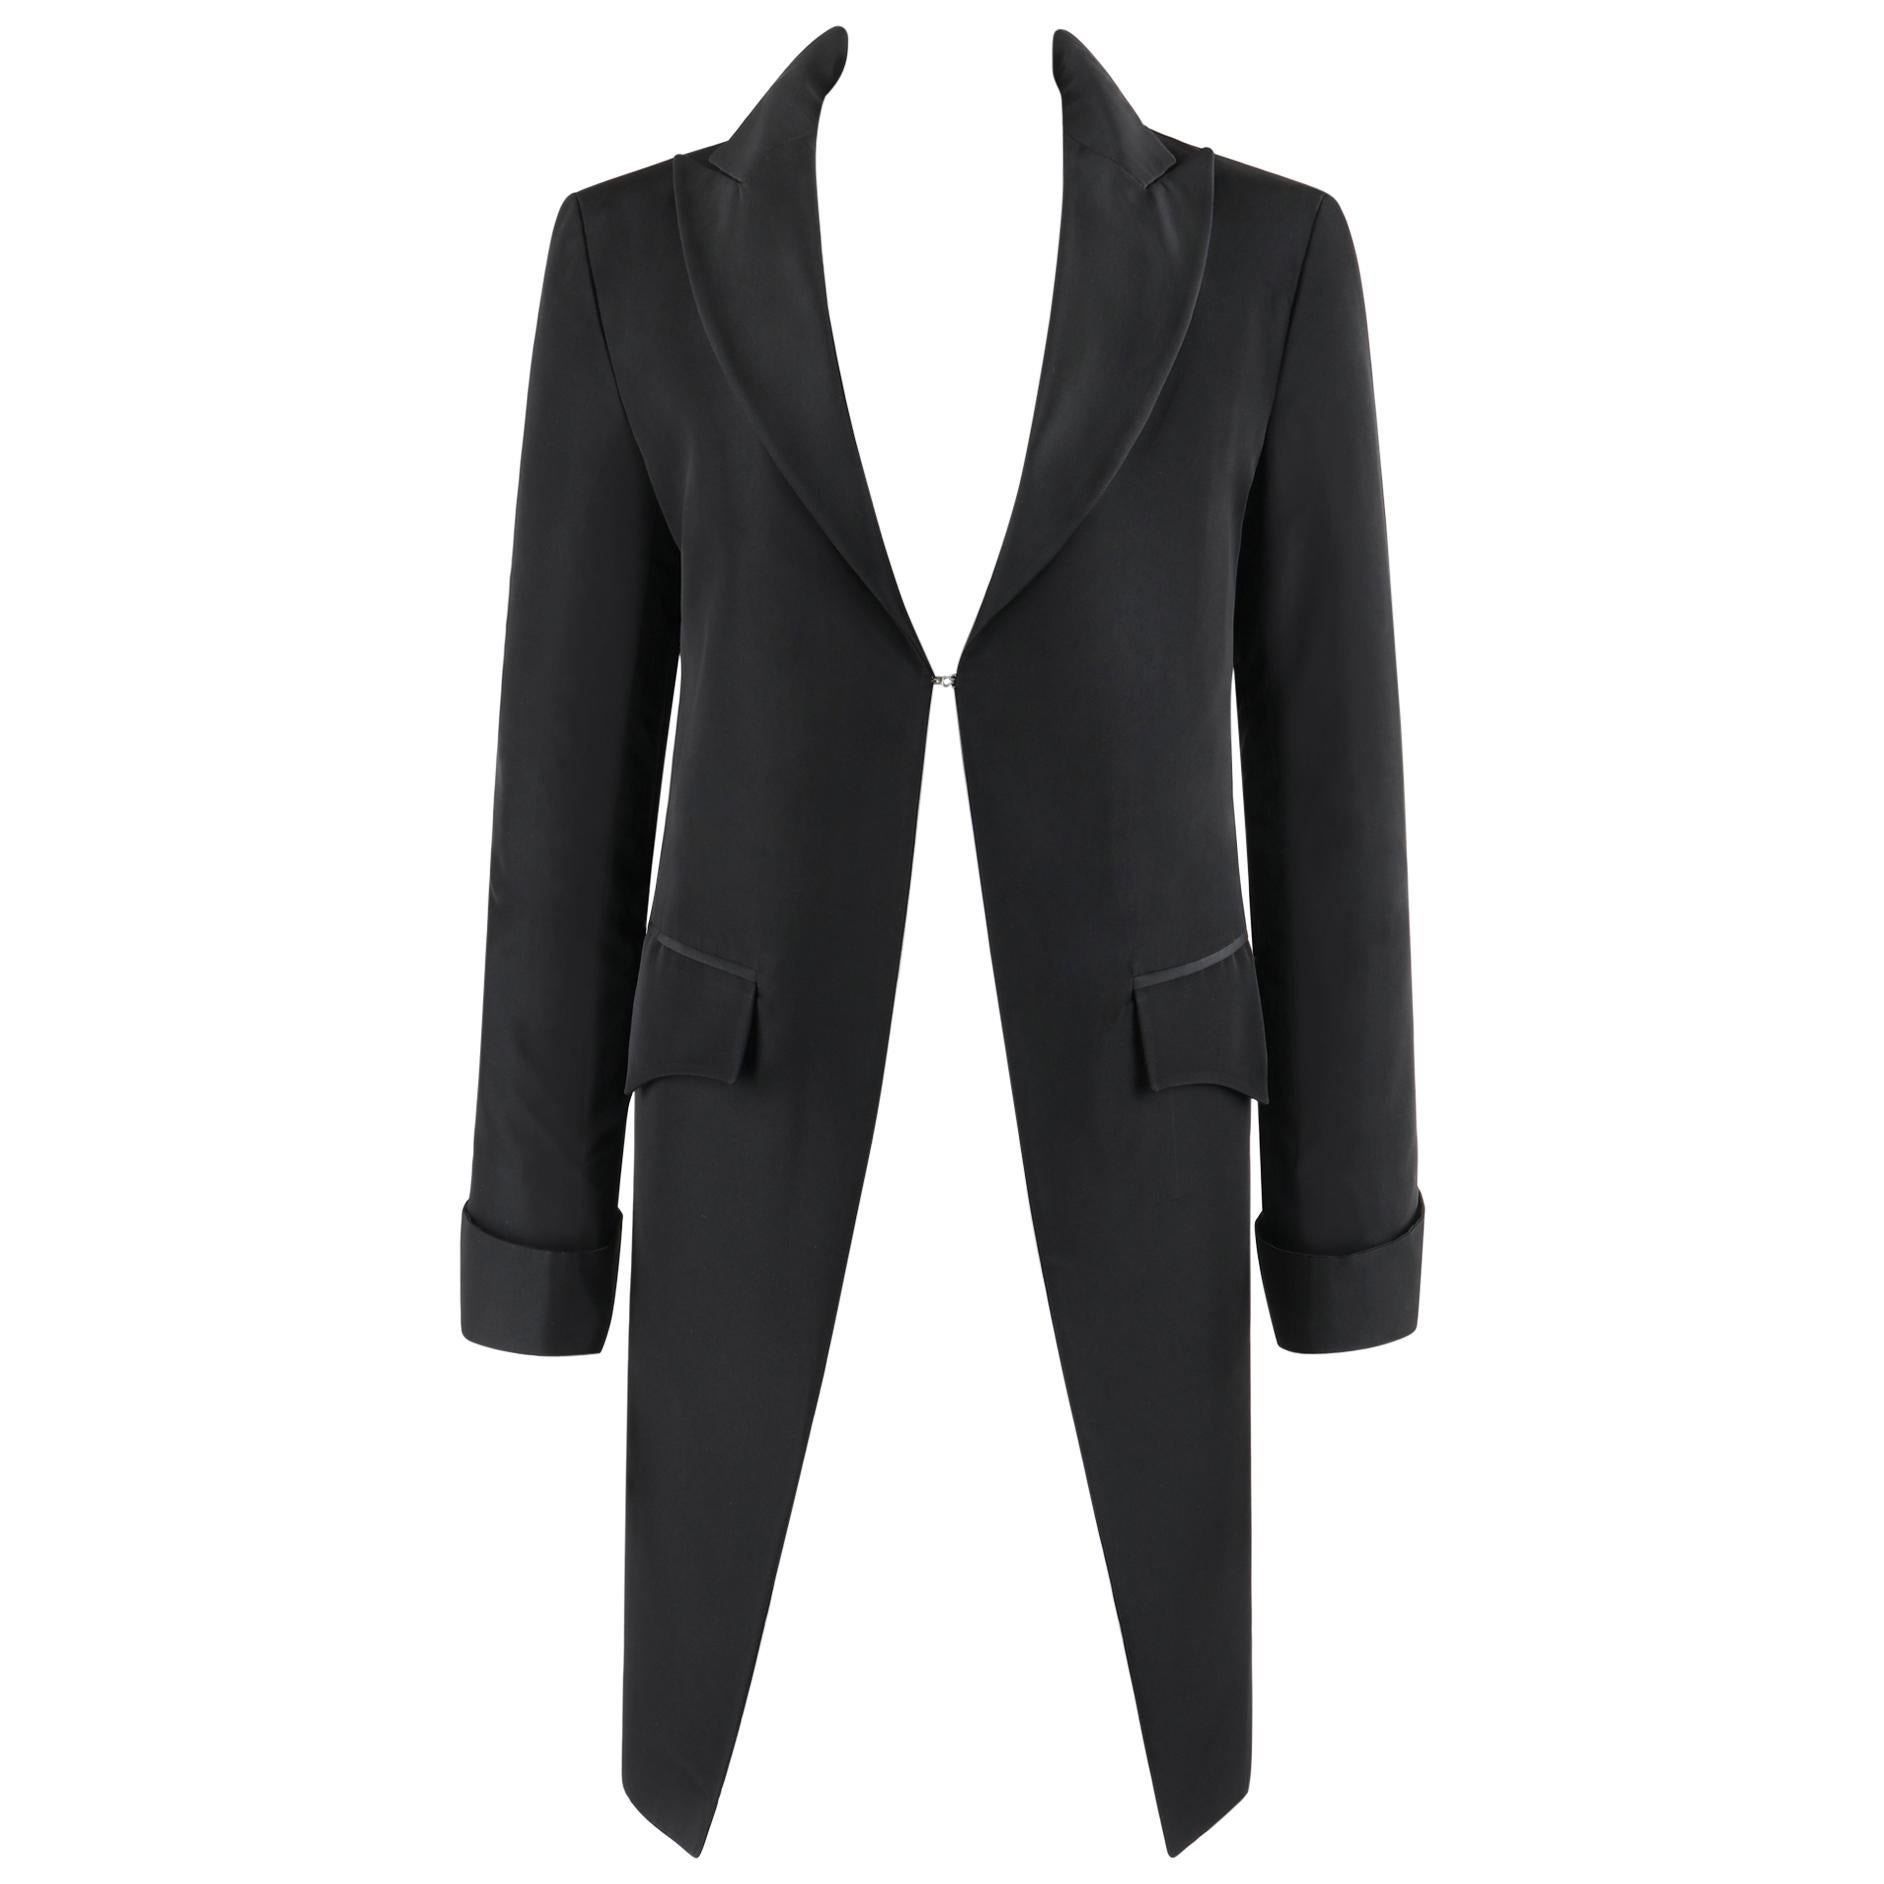 ALEXANDER McQUEEN S/S 1997 “La Poupee” Black Single Closure Cutaway Dress Jacket